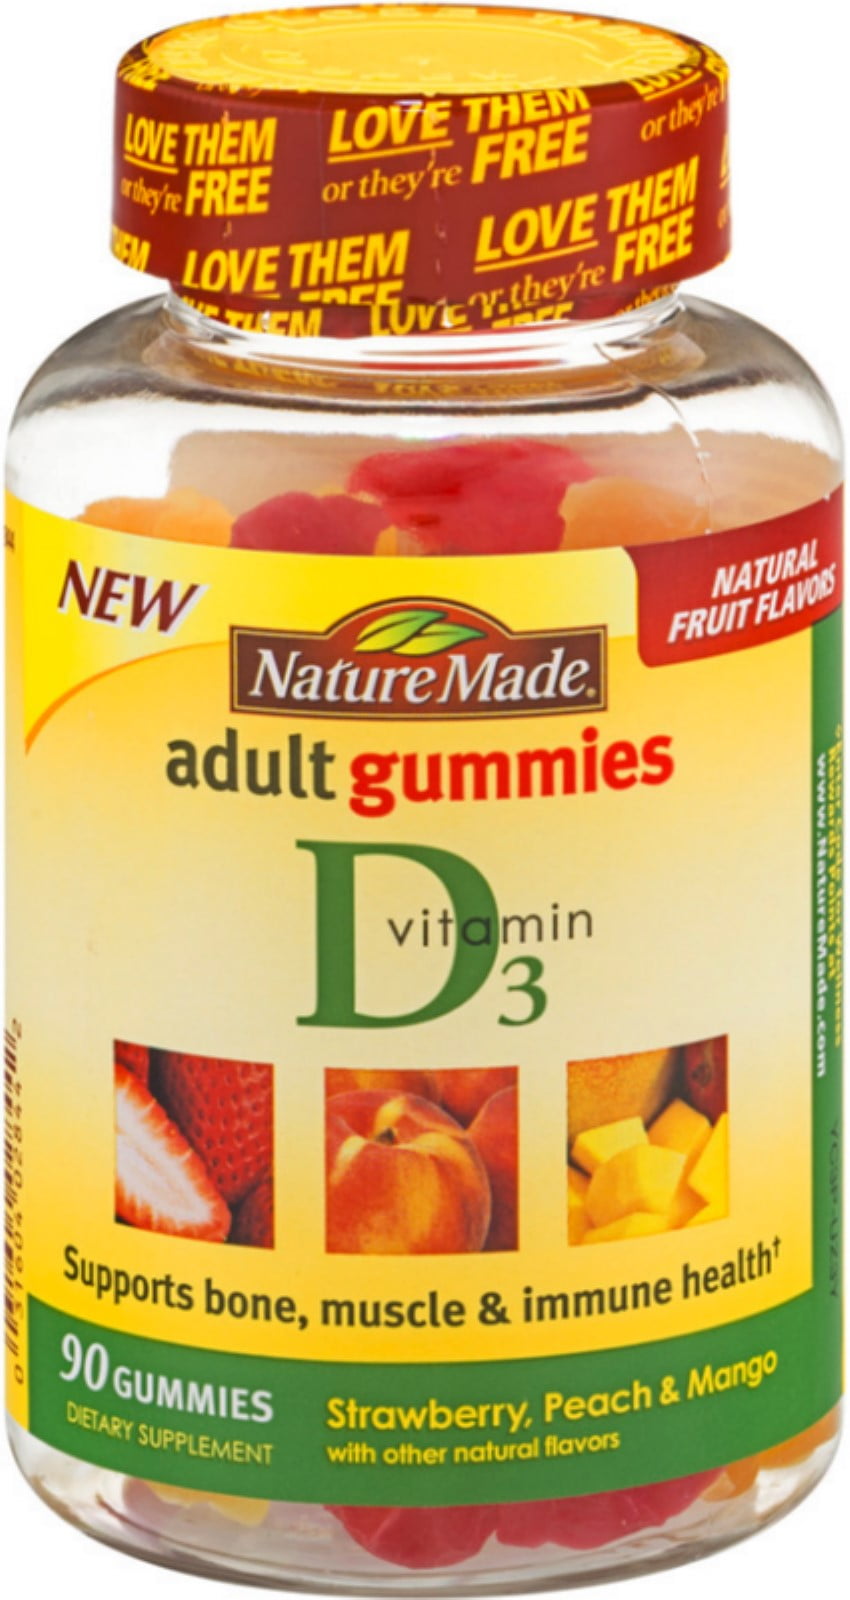 Nature Made Vitamin D3 Adult Gummies, Strawberry, Peach & Mango ...